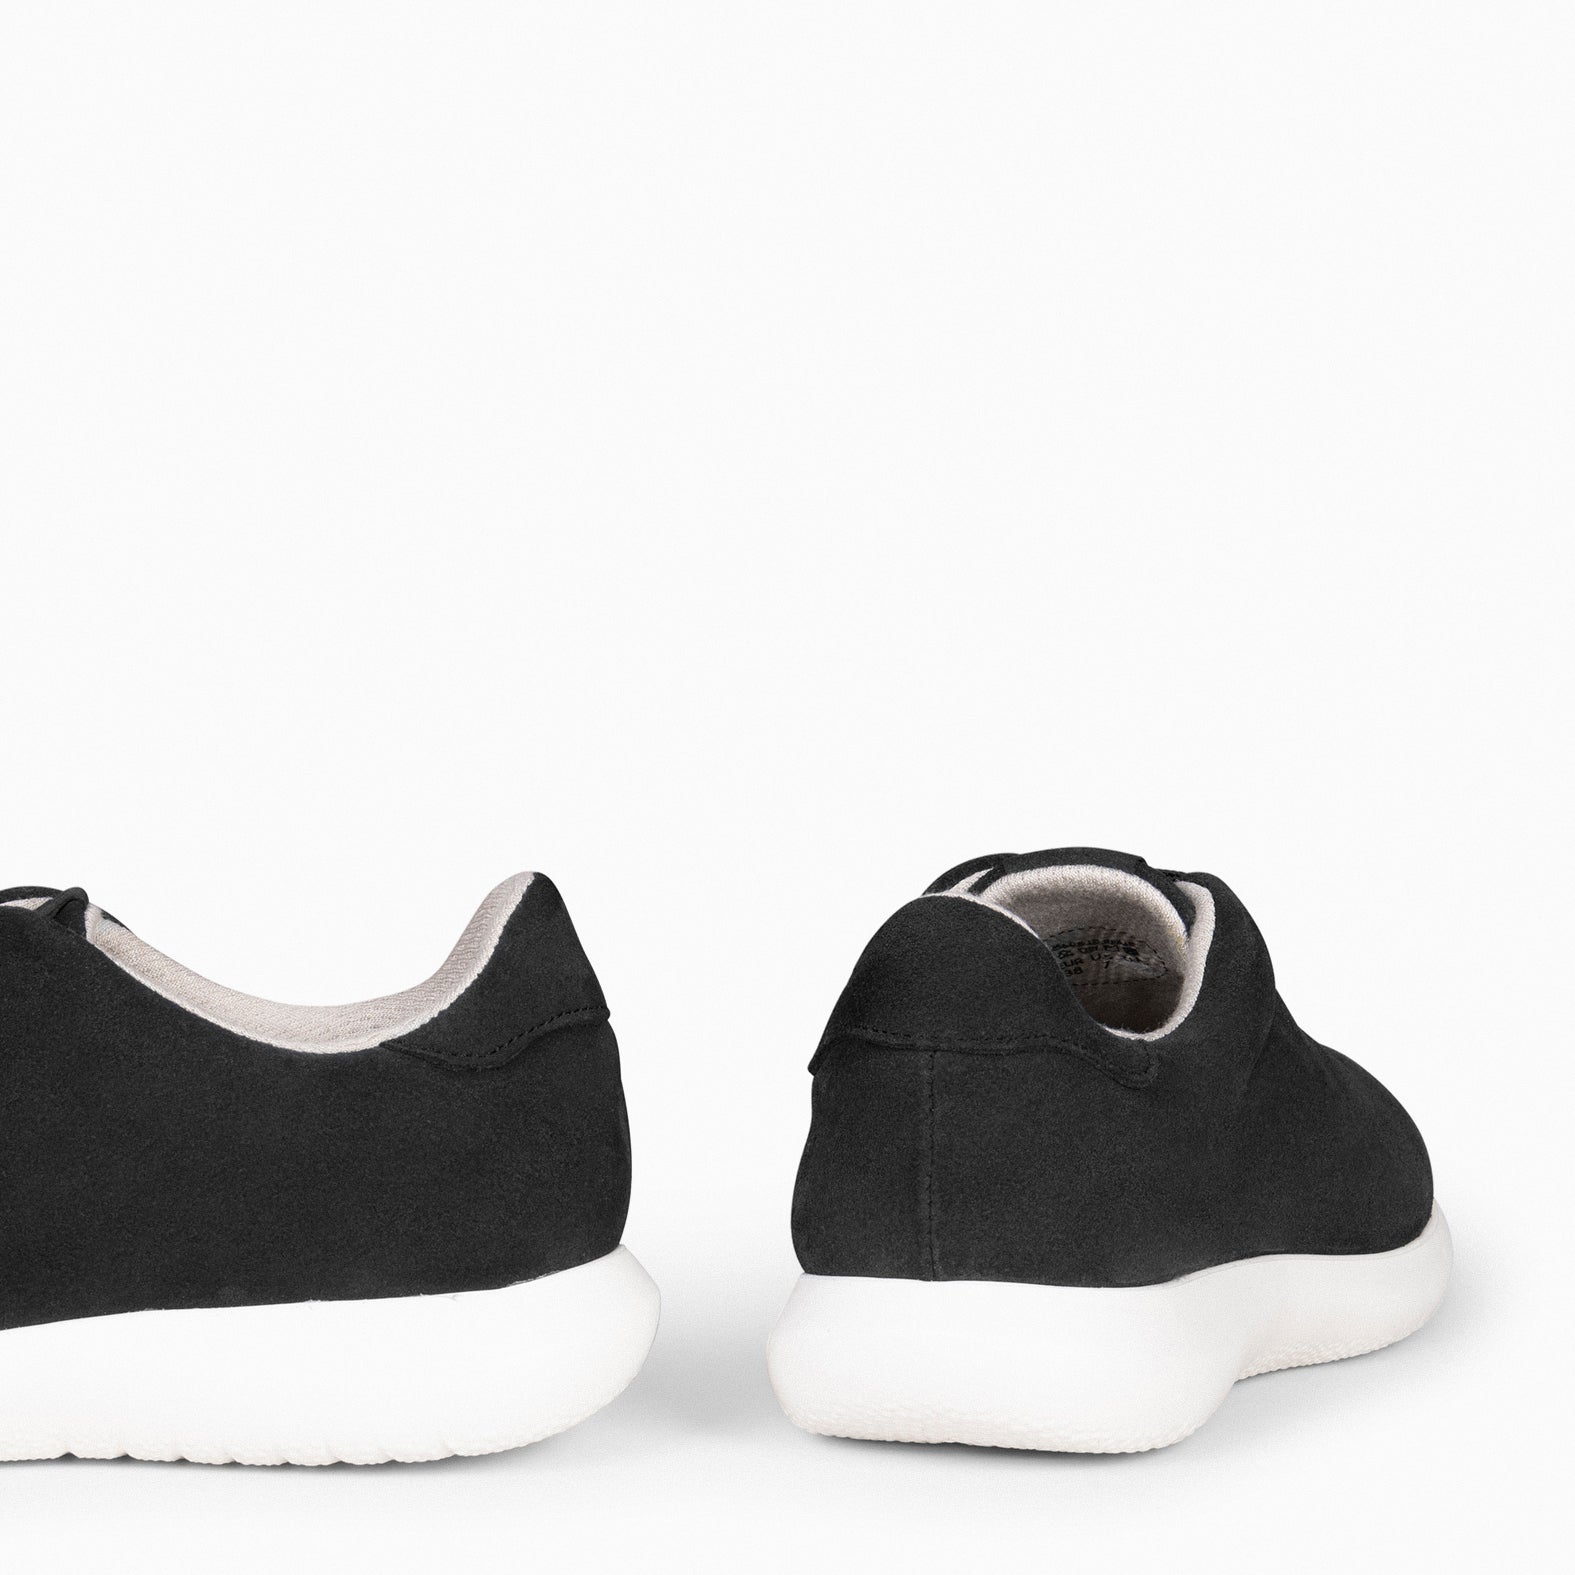 WALK – BLACK comfortable women sneakers